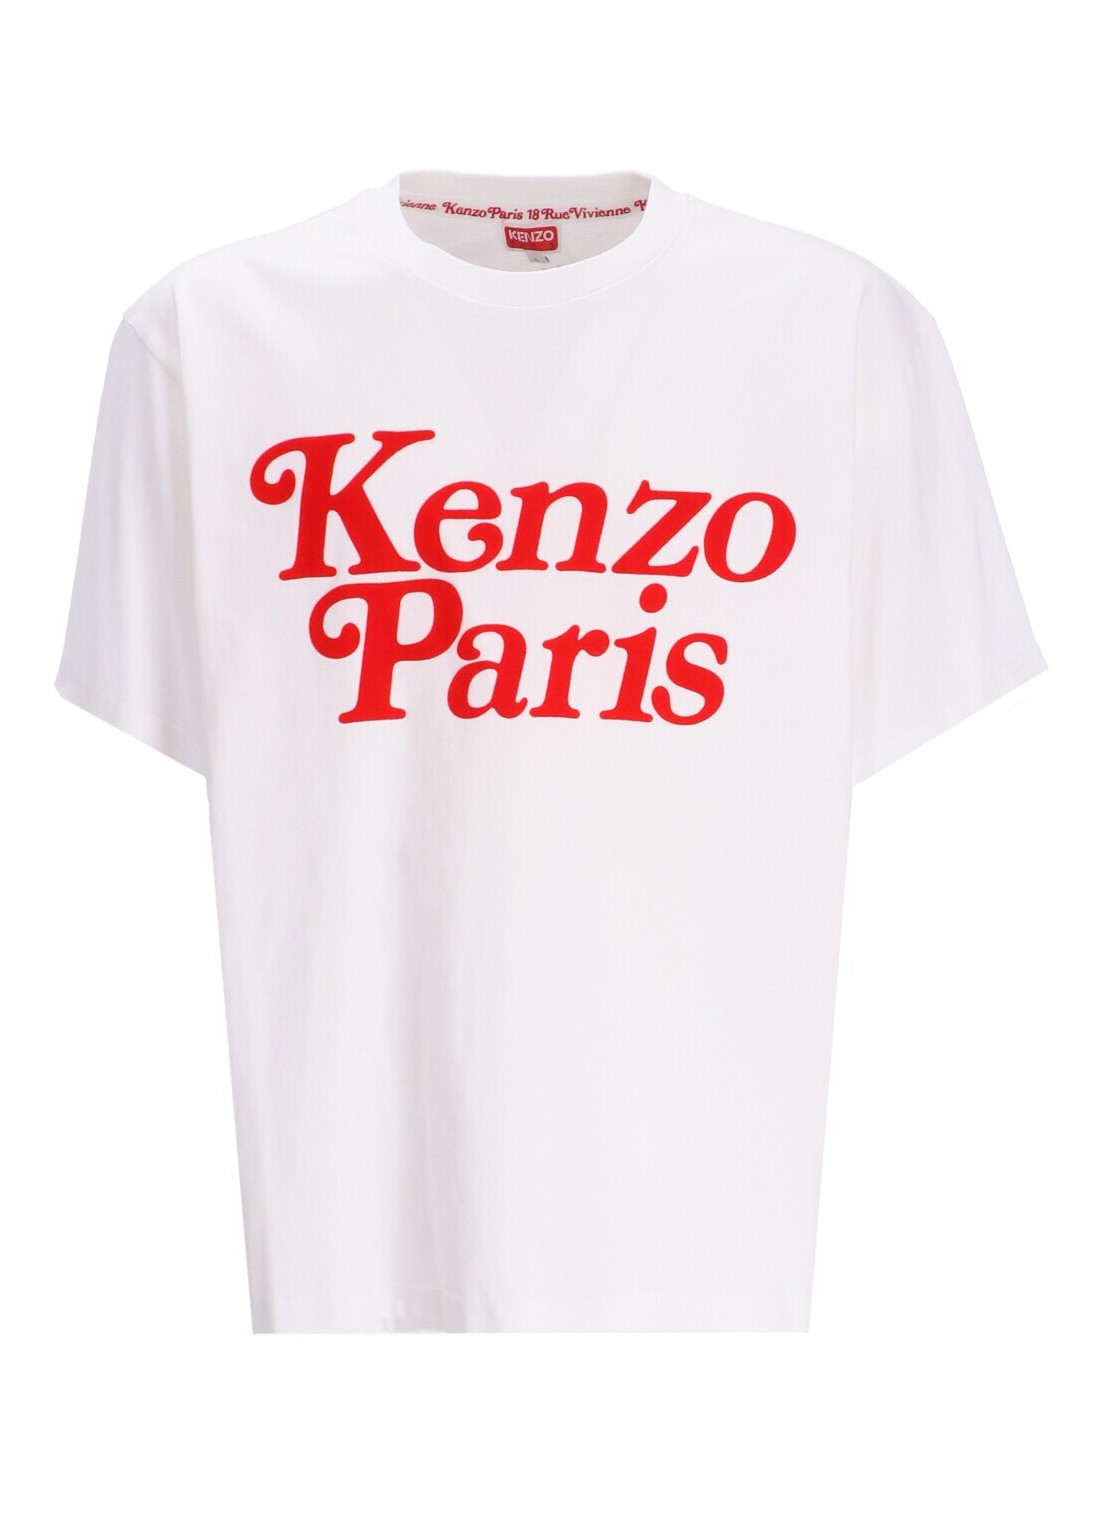 Camiseta kenzo t-shirt man kenzo by verdy oversize tshirt fe55ts1914sy 02 talla XL
 